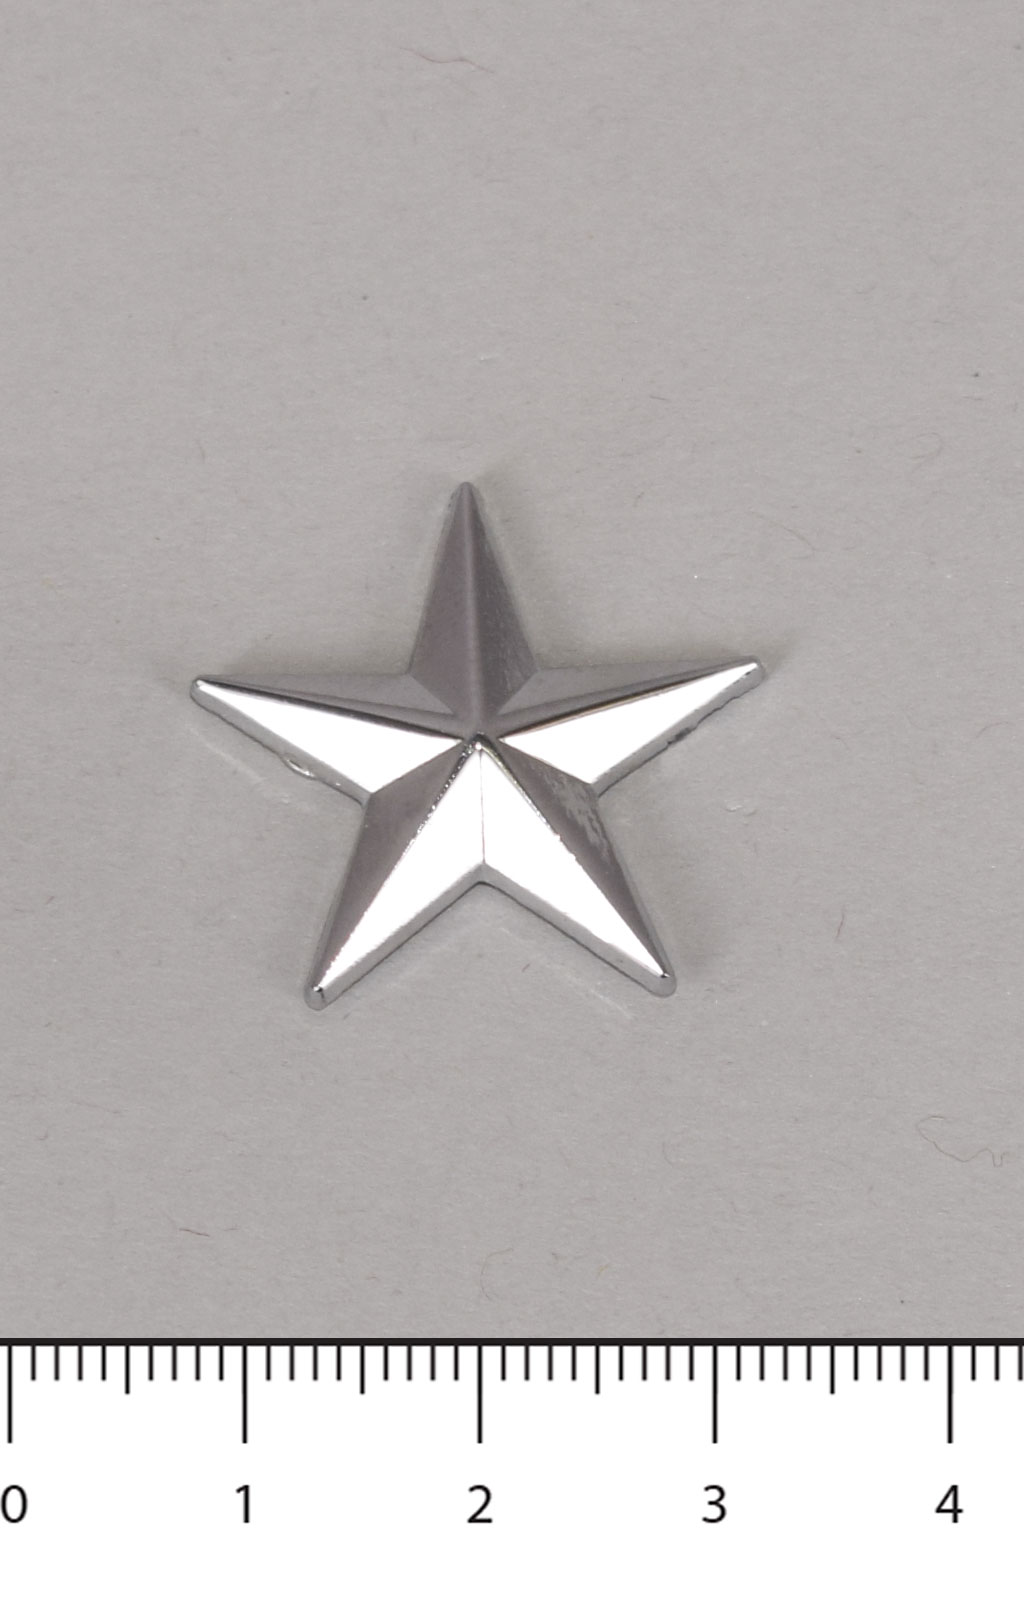 Знак звание General-1 silver (P12171) США